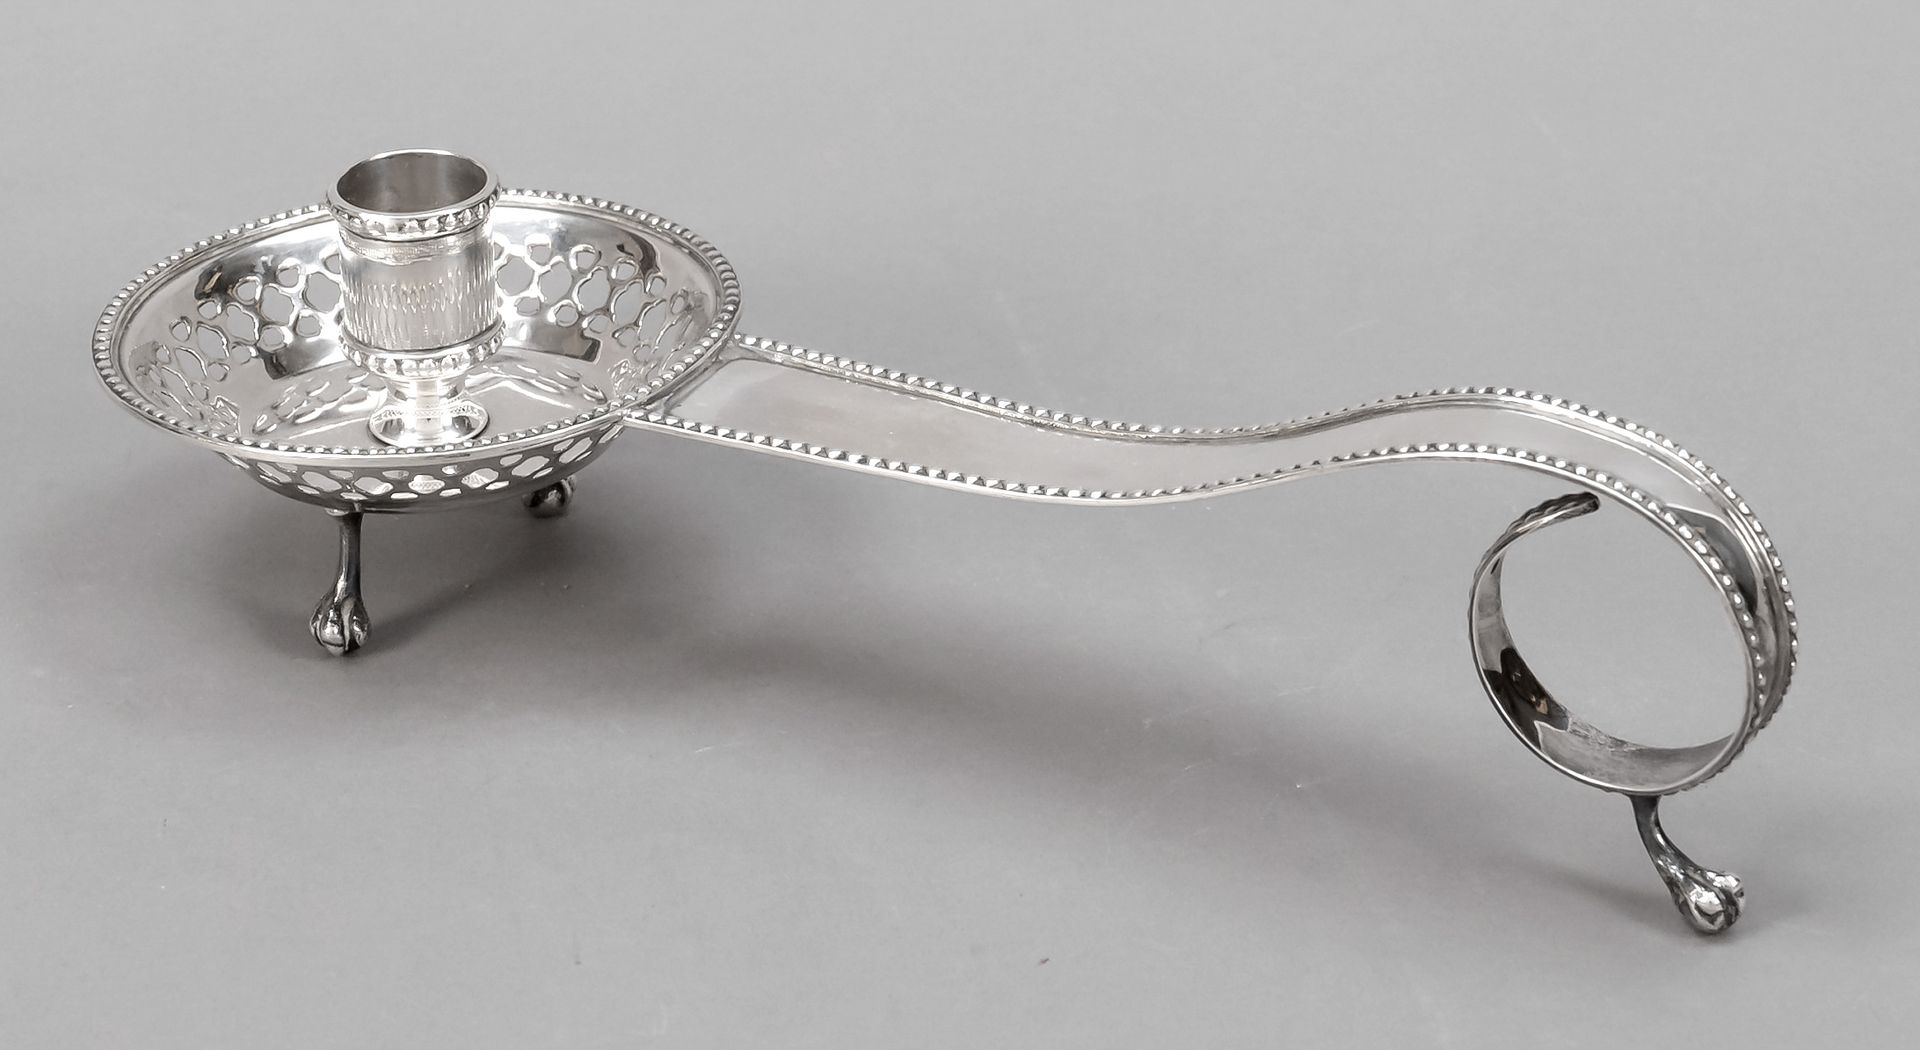 Null 手摇烛台，20世纪，经银质测试，有3只脚，圆形烛台边缘有镂空工艺，长长的延伸手柄有珍珠浮雕装饰，长26厘米，约136克。